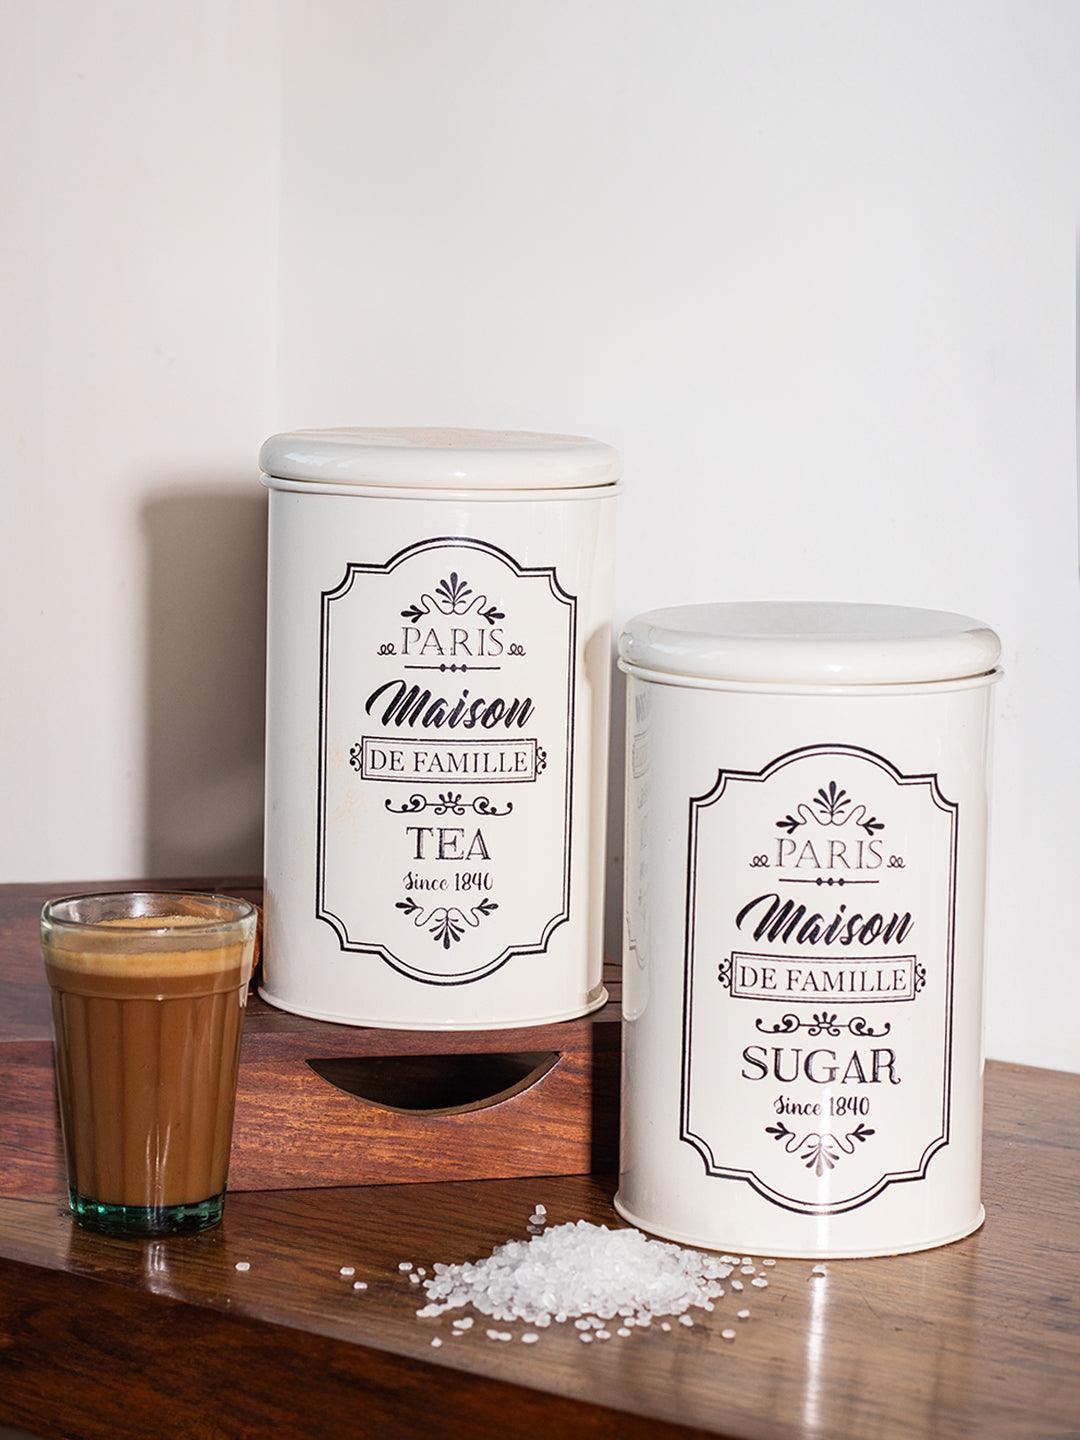 Metal Tea & Sugar Jar Set - Each Ivory & 900 Ml